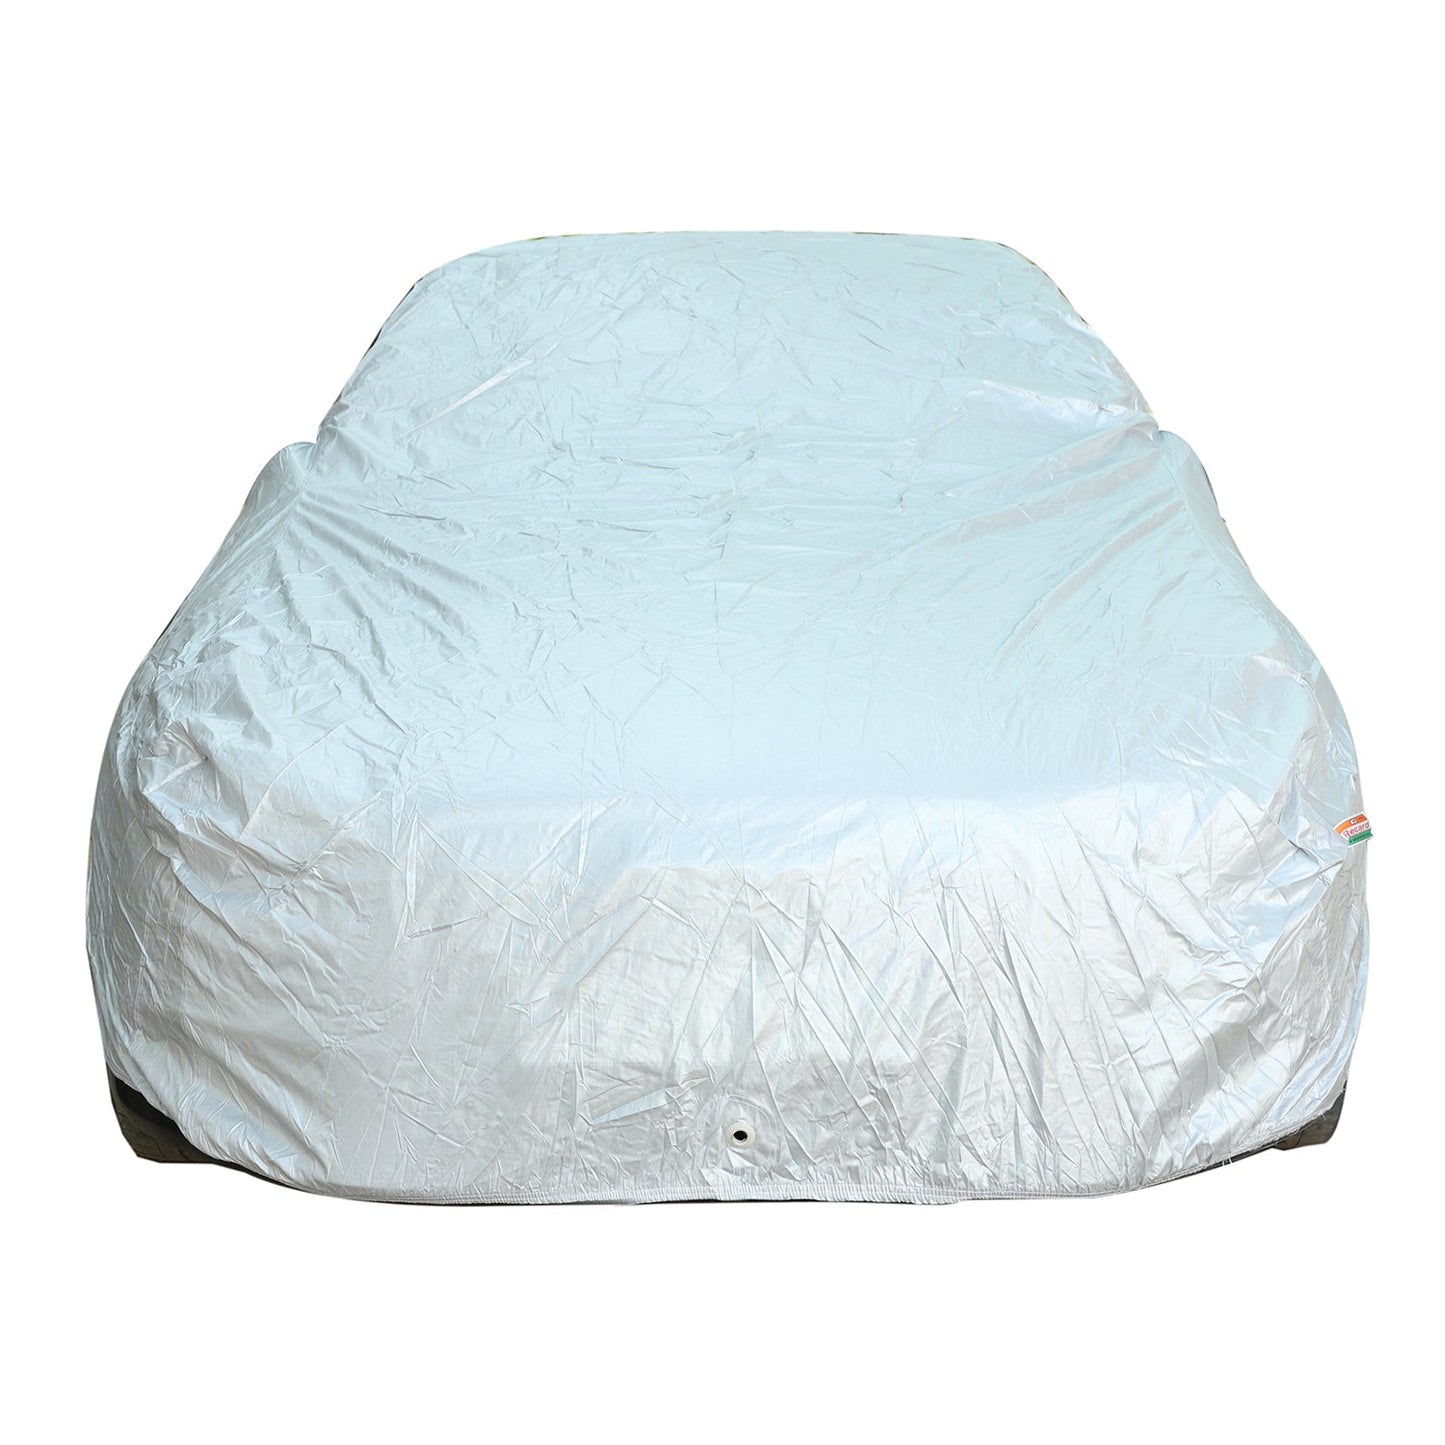 Oshotto Silvertech Car Body Cover (Without Mirror Pocket) For Maruti Suzuki Alto - Silver